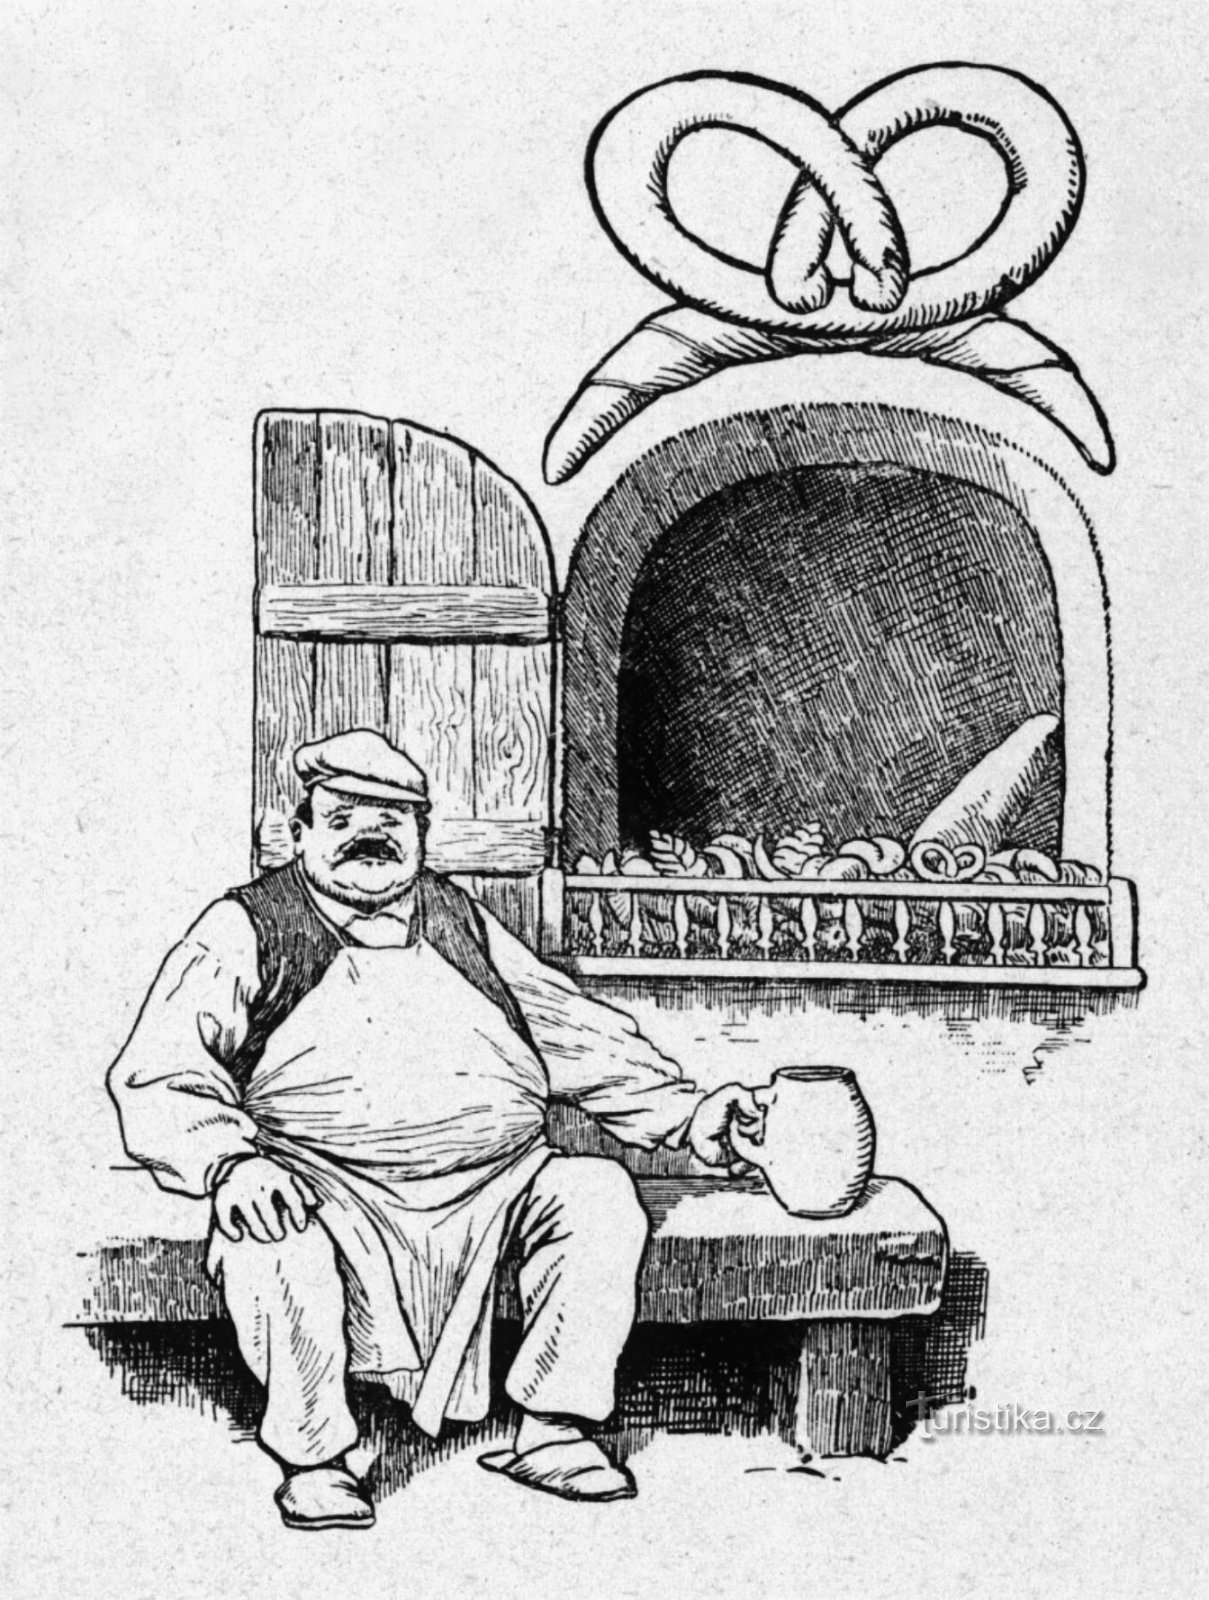 Crtež Věnceslava Černýja Úpí pekara Konvalinke iz knjige